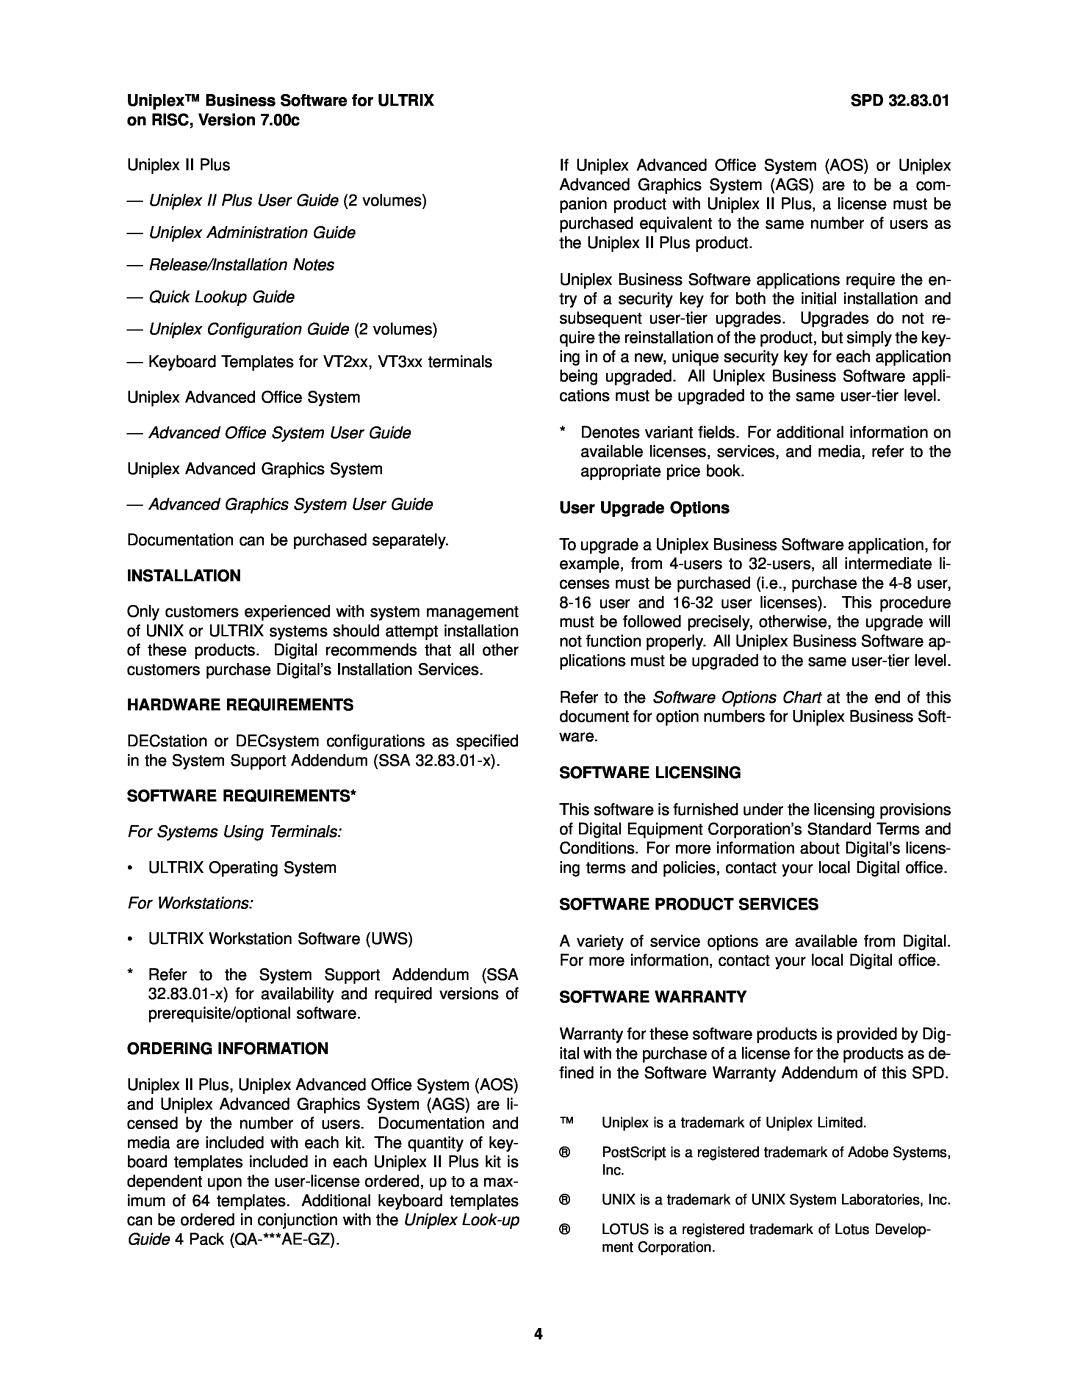 2Wire SPD 32.83.01 Uniplex II Plus User Guide 2 volumes, Uniplex Administration Guide, Advanced Ofﬁce System User Guide 